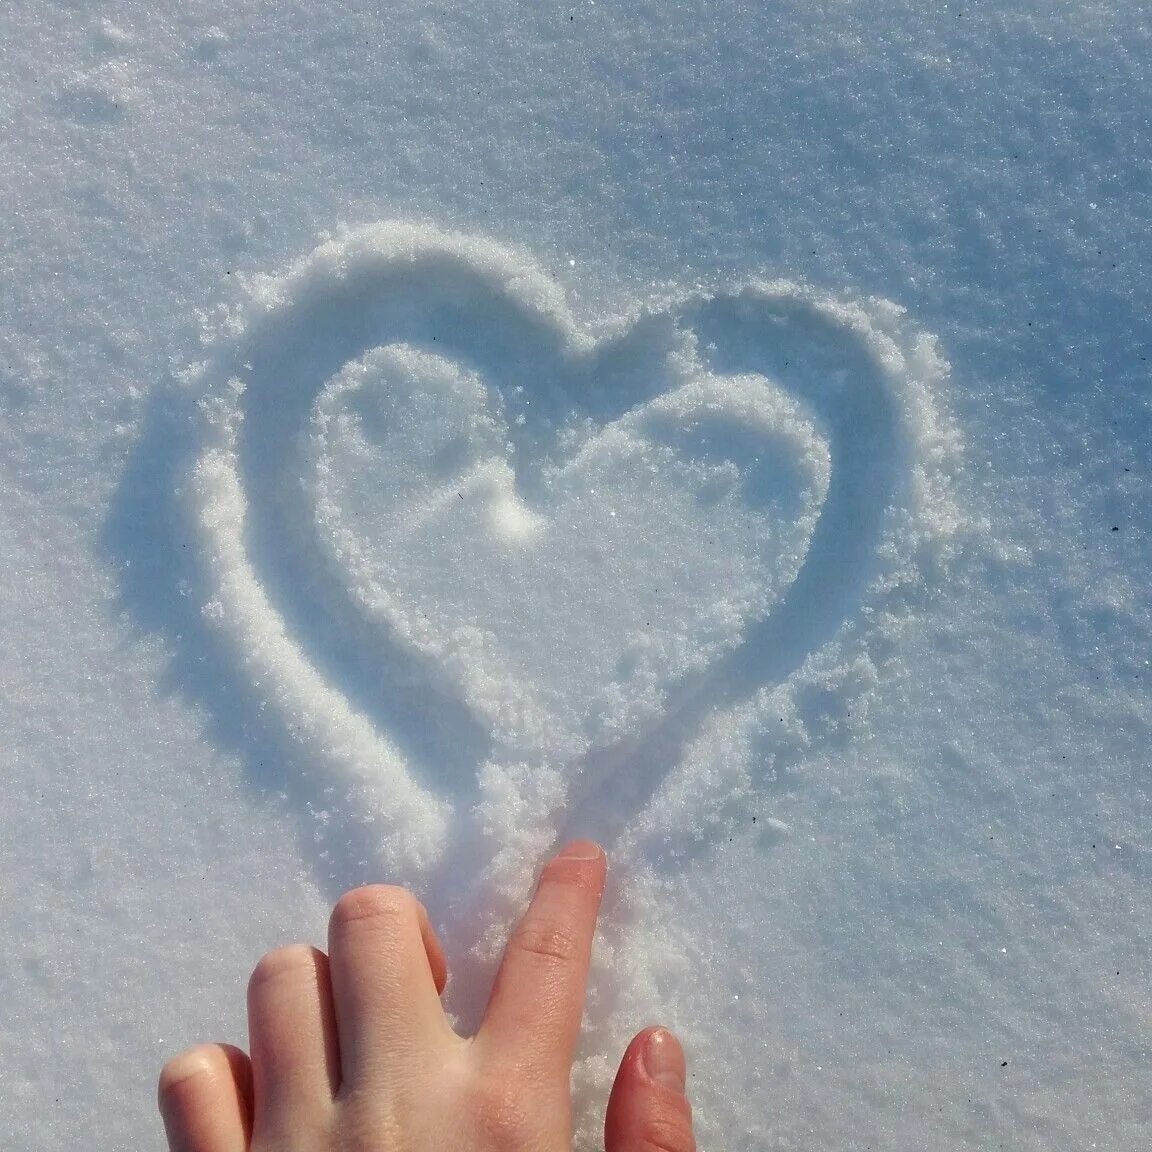 В тепле сердце в льдах. Сердце из снега. Сердце на снегу. Сердечко из снега. Сердечко на снегу.